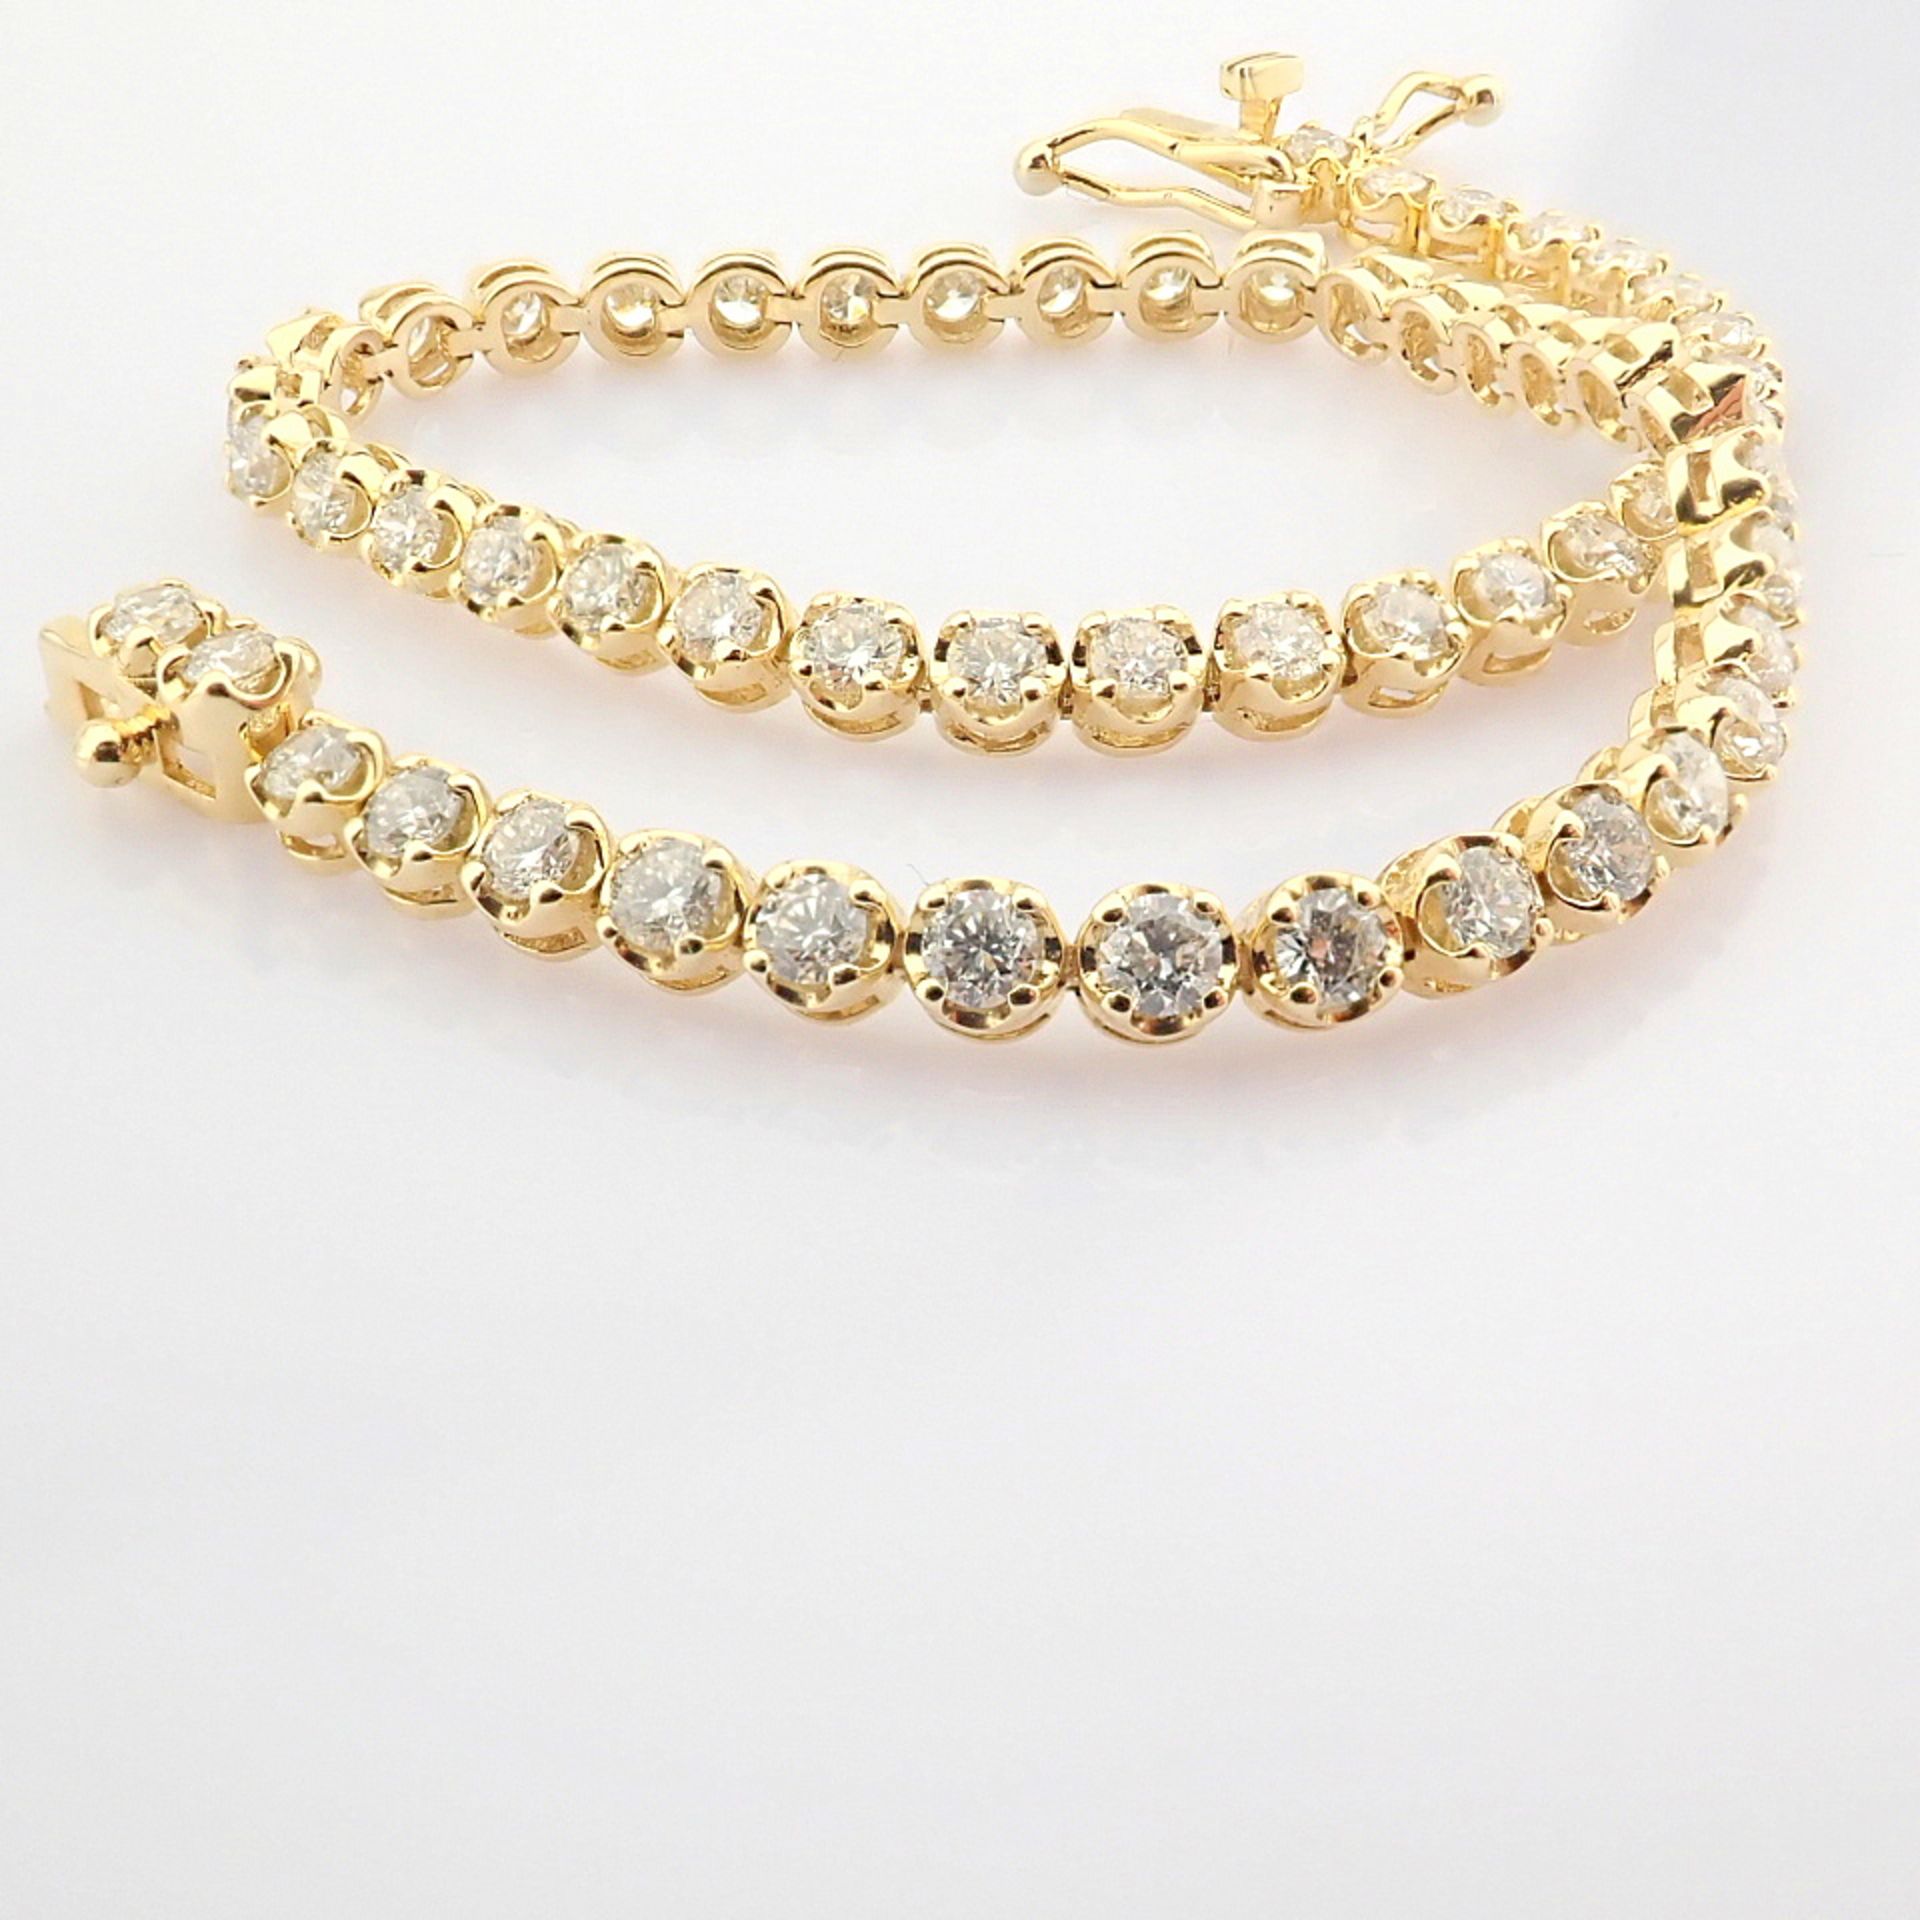 2,10 Ct. Diamond Tennis Bracelet (Crown) - 14K Yellow Gold - Image 3 of 14